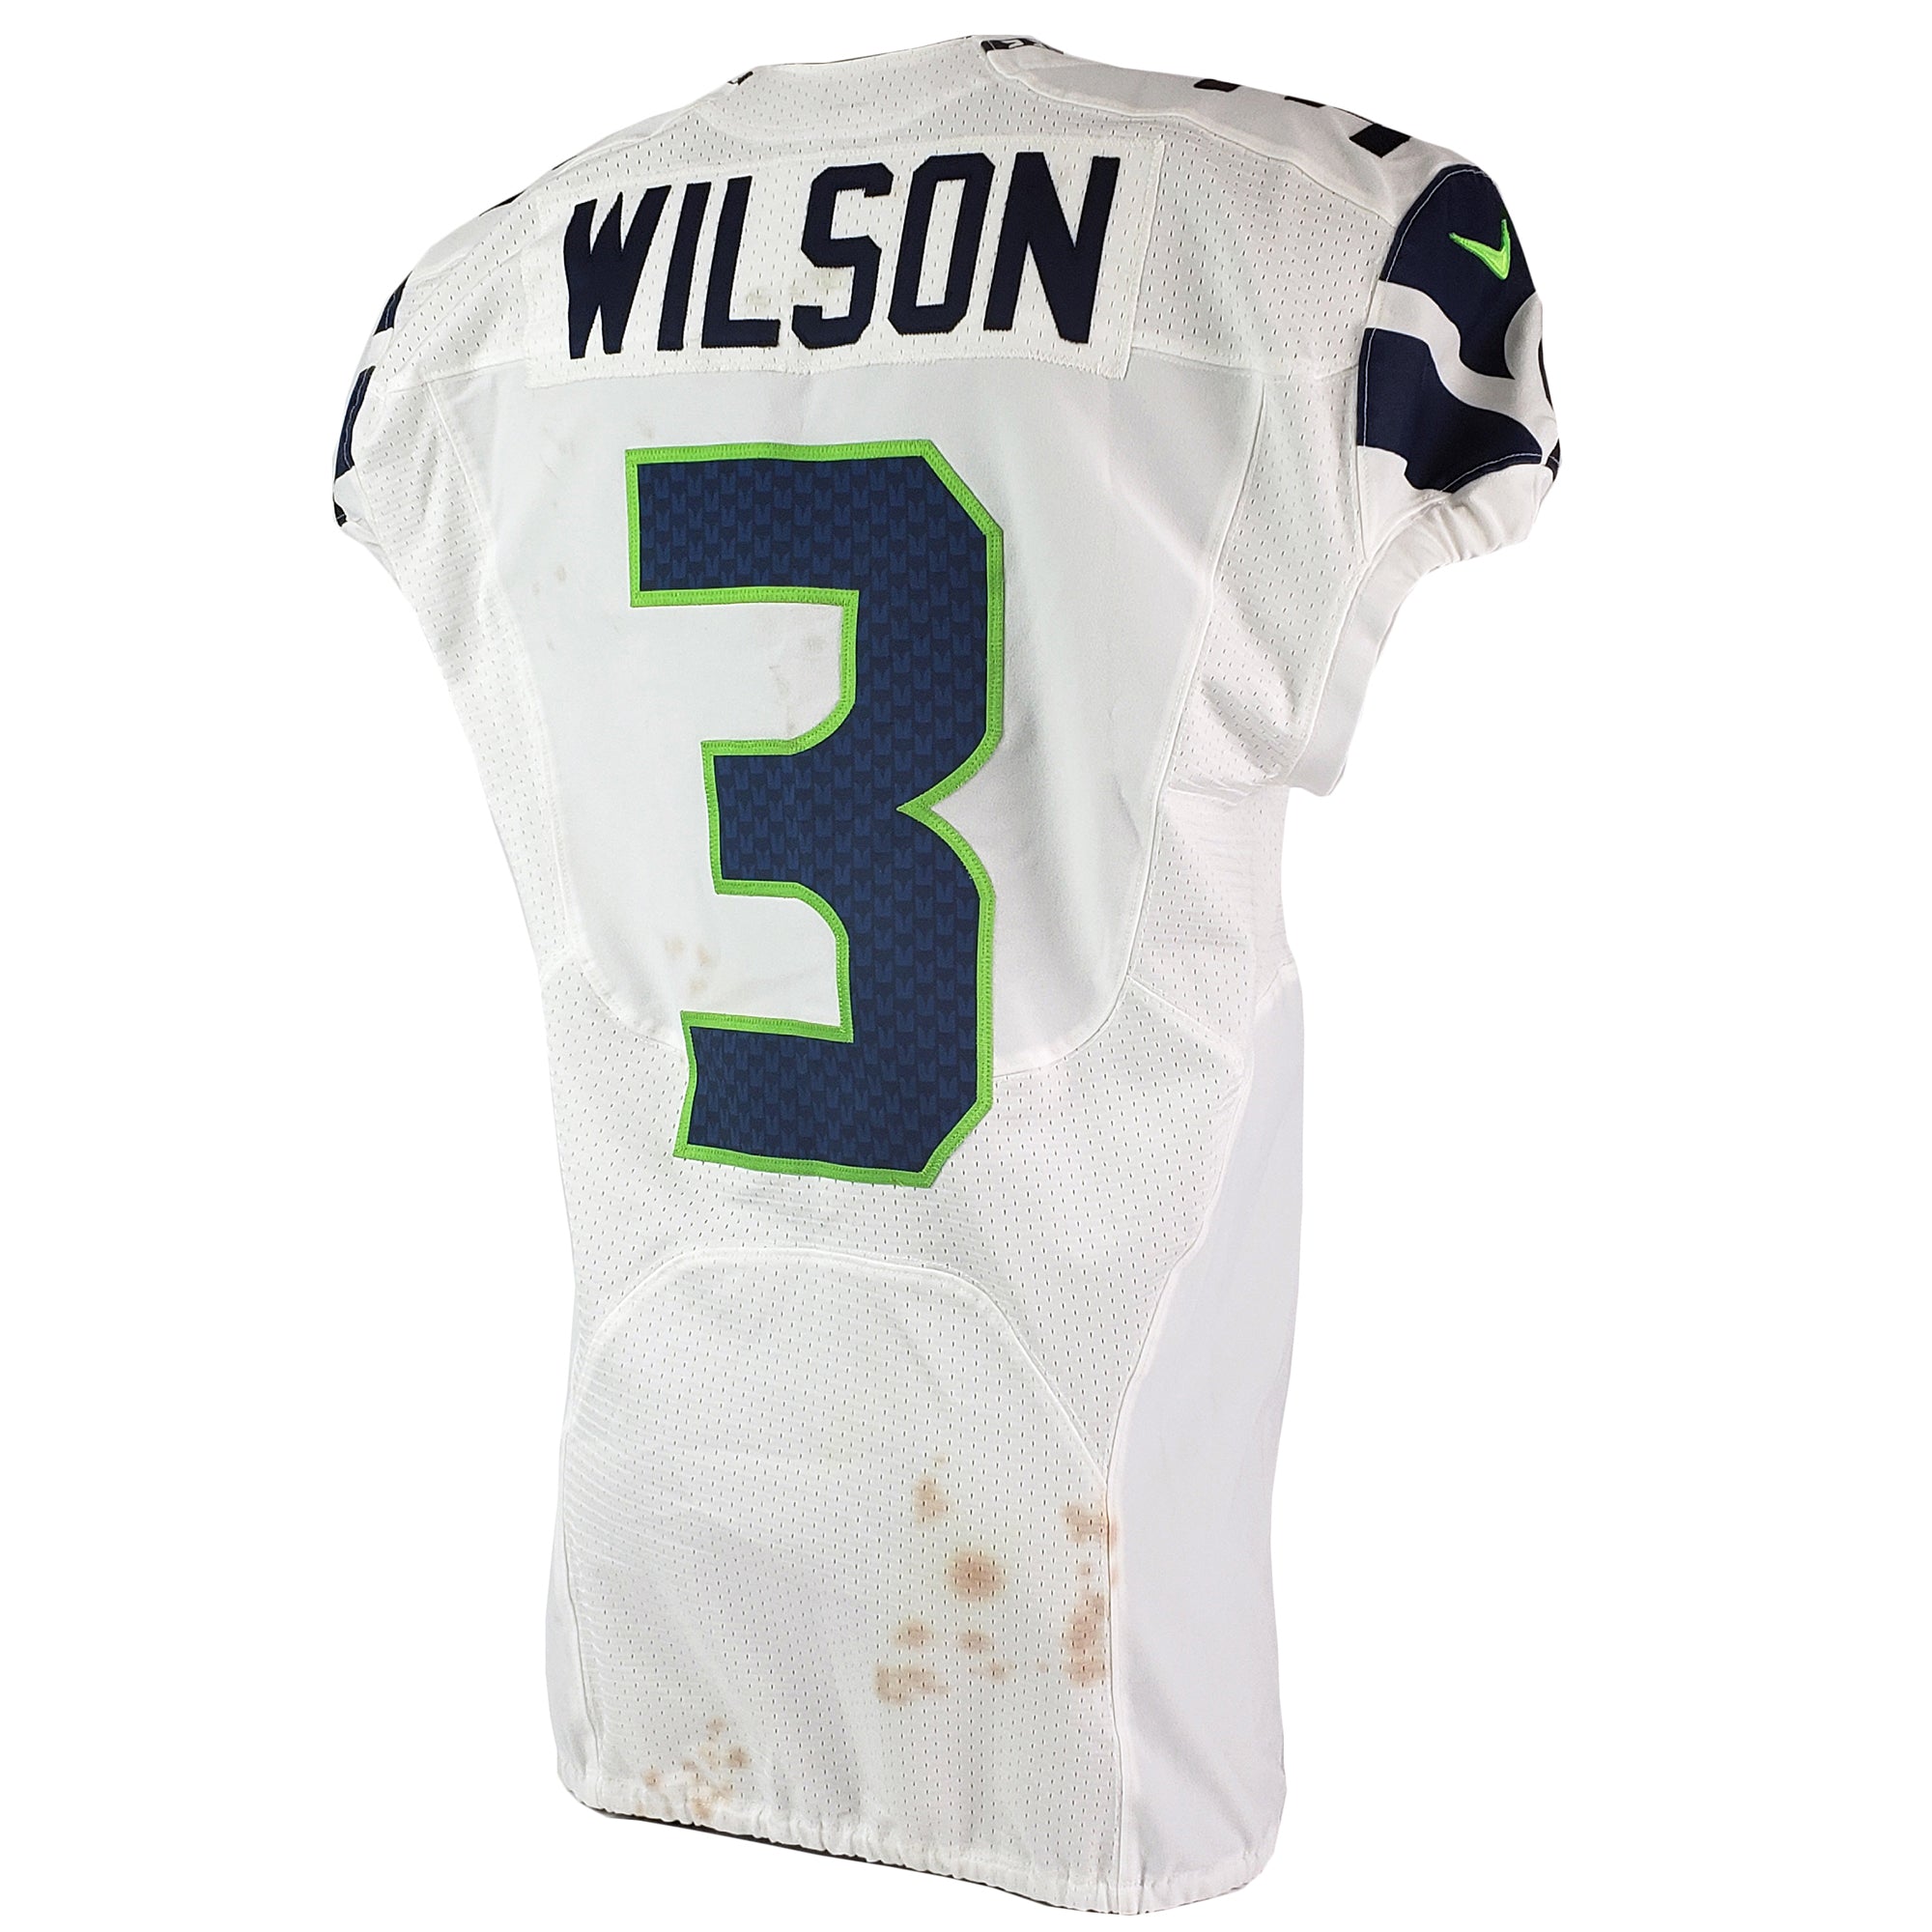 Russell Wilson 2015 Seattle Seahawks Game Worn Jersey